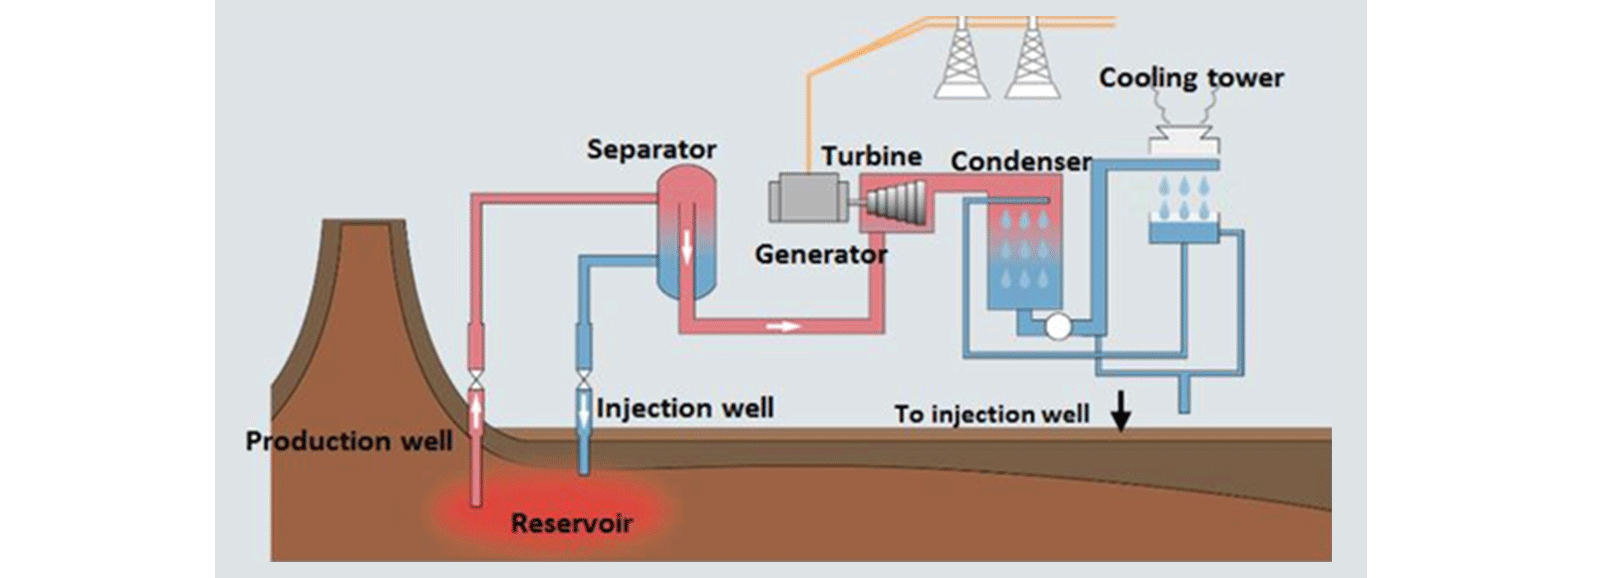 Geotermisk kraftverk: flashdampsystem